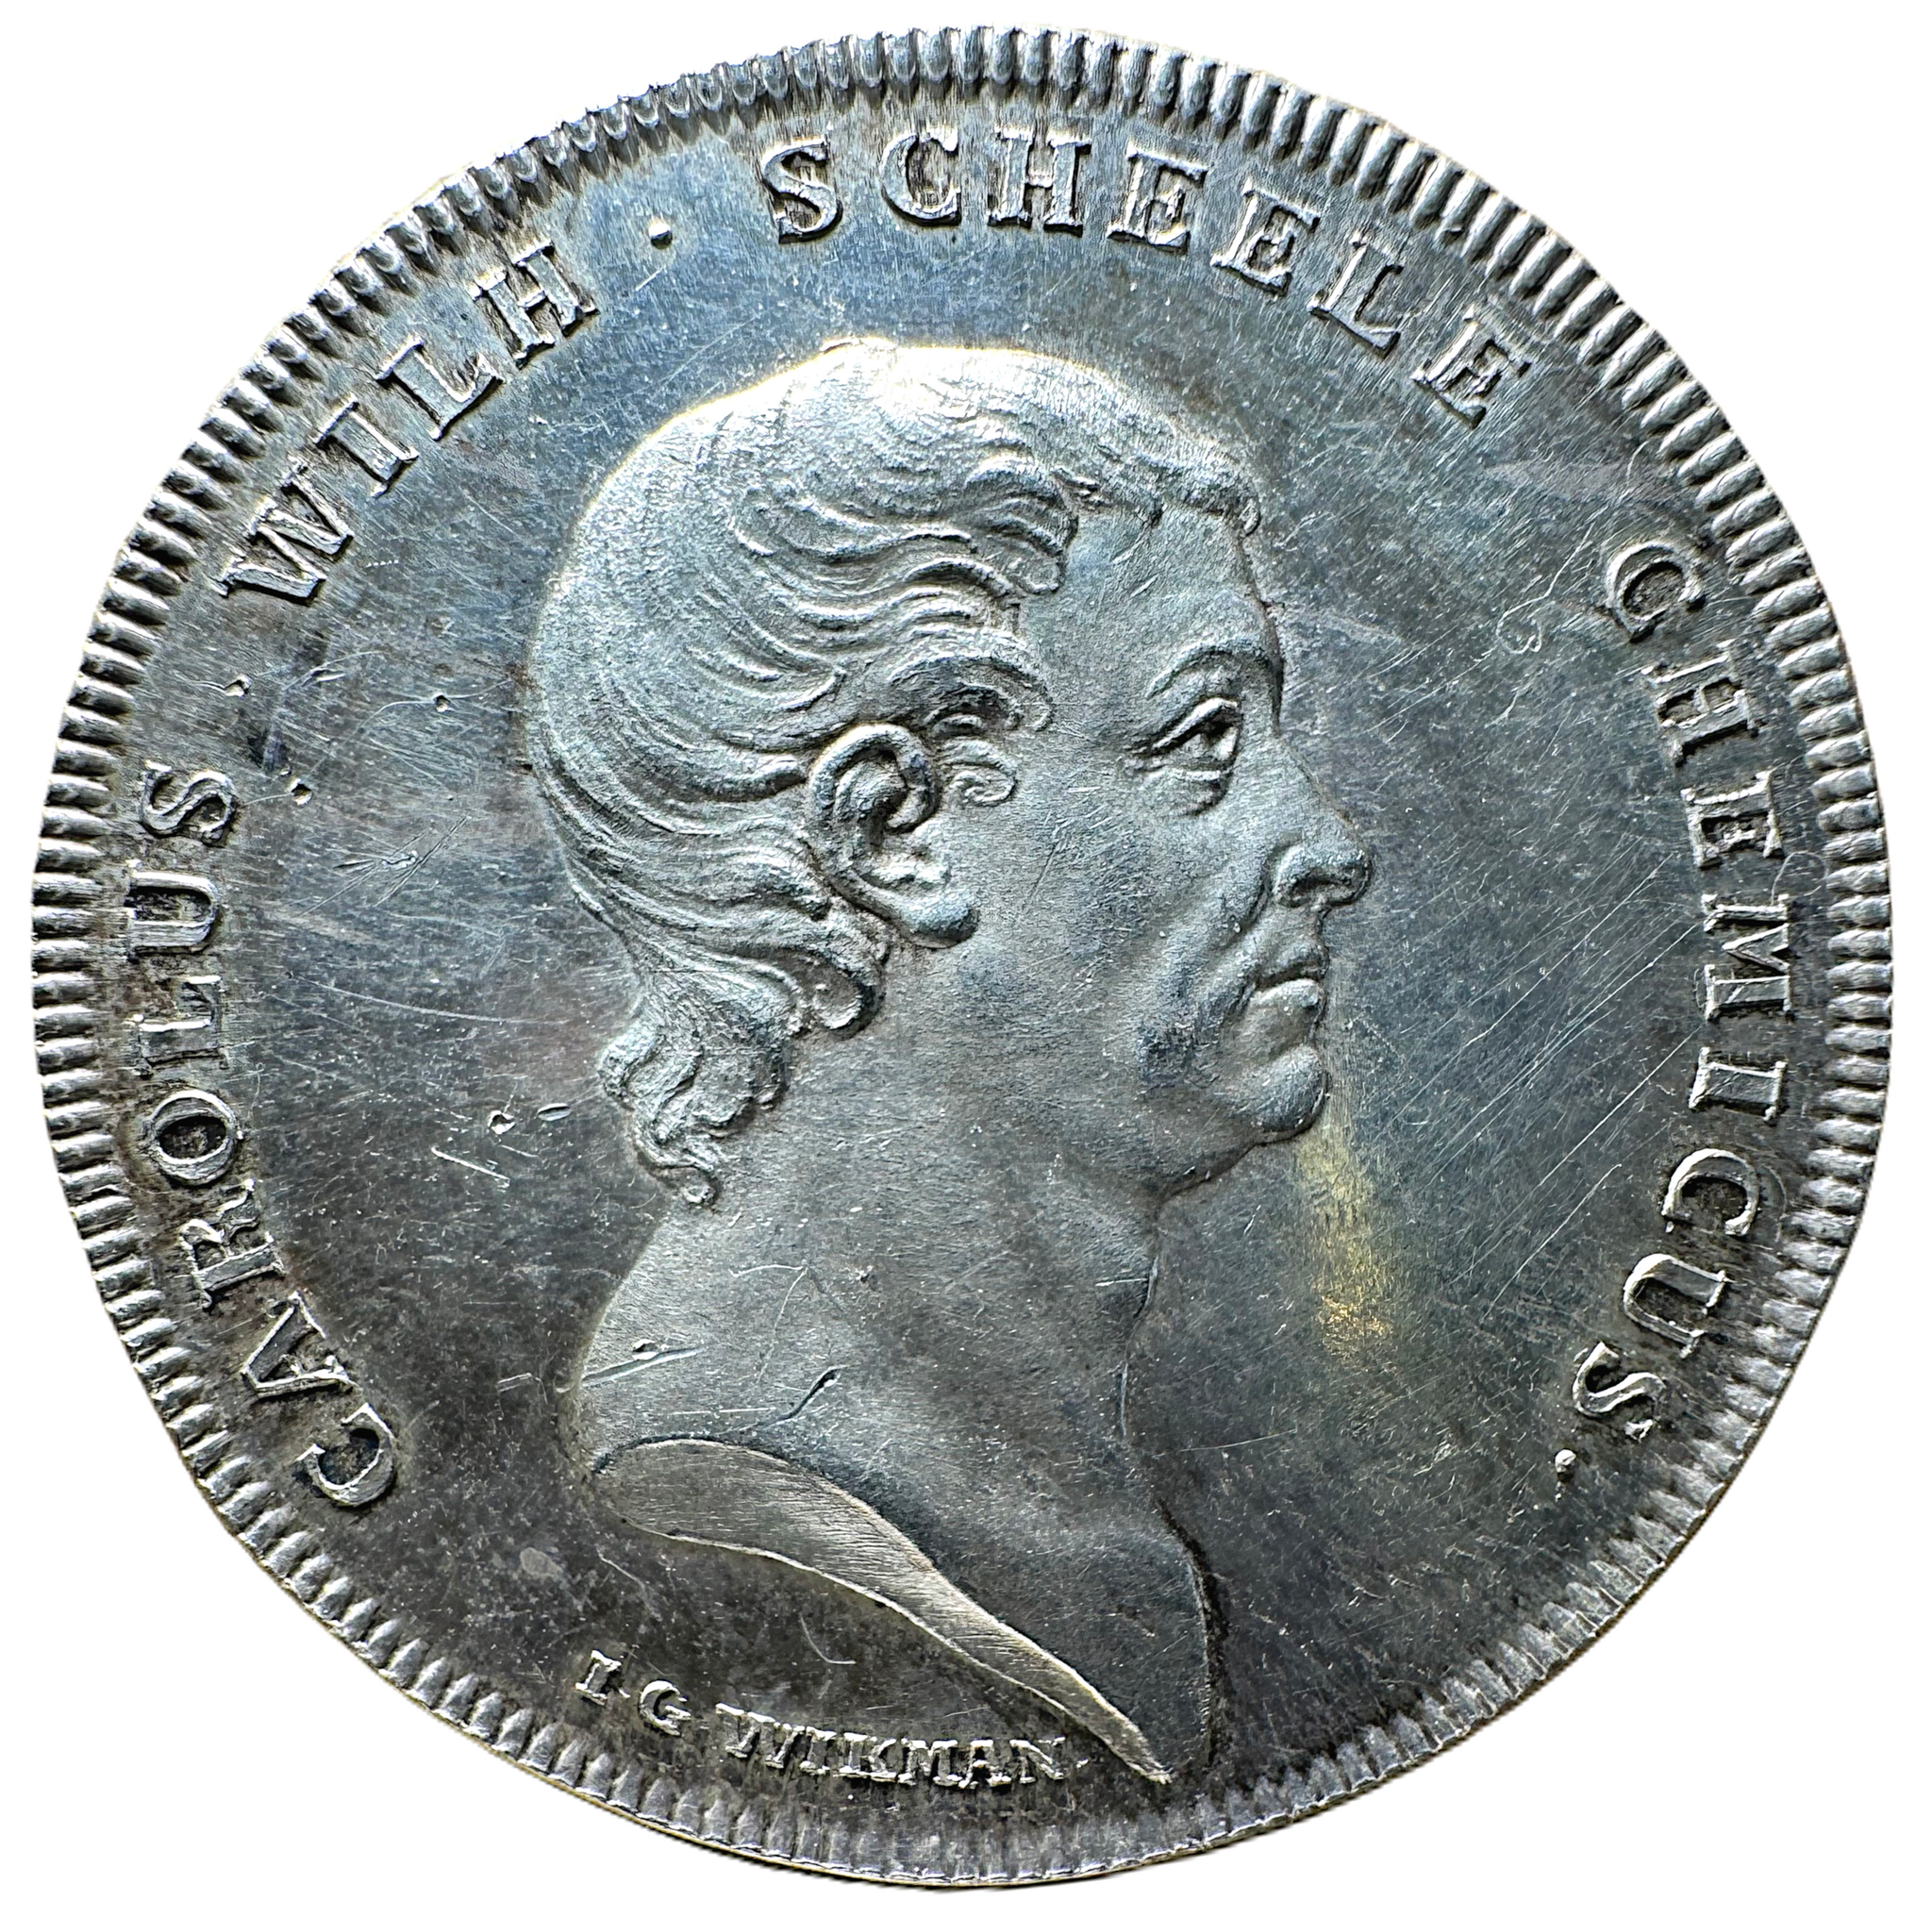 Carl Wilhelm Scheele (1742-1786) - En av de mest framstående kemisterna i Europa - graverad av Wikman 1789